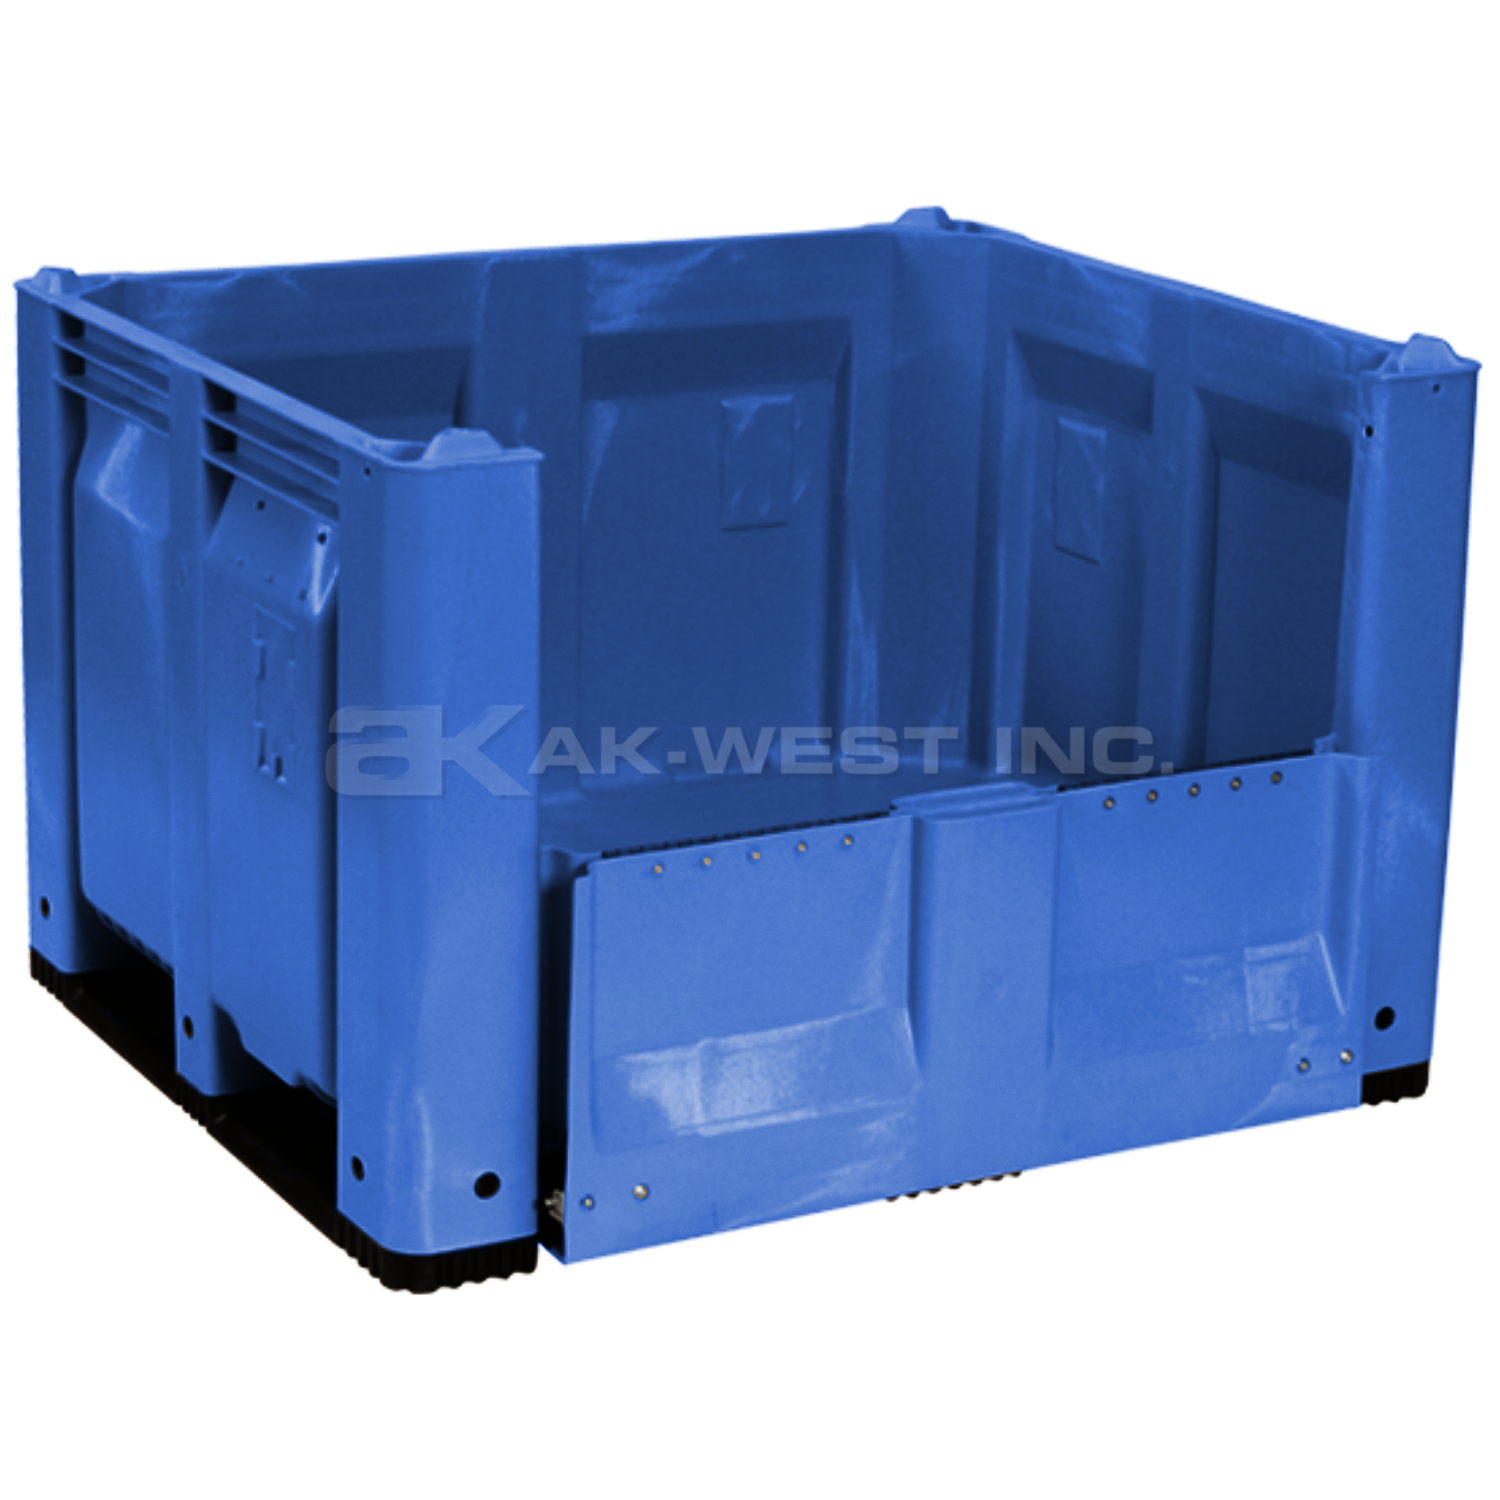 Blue, 48"L x 40"W x 31"H Bulk Container w/ Long Side Drop Door, Short Side Runners